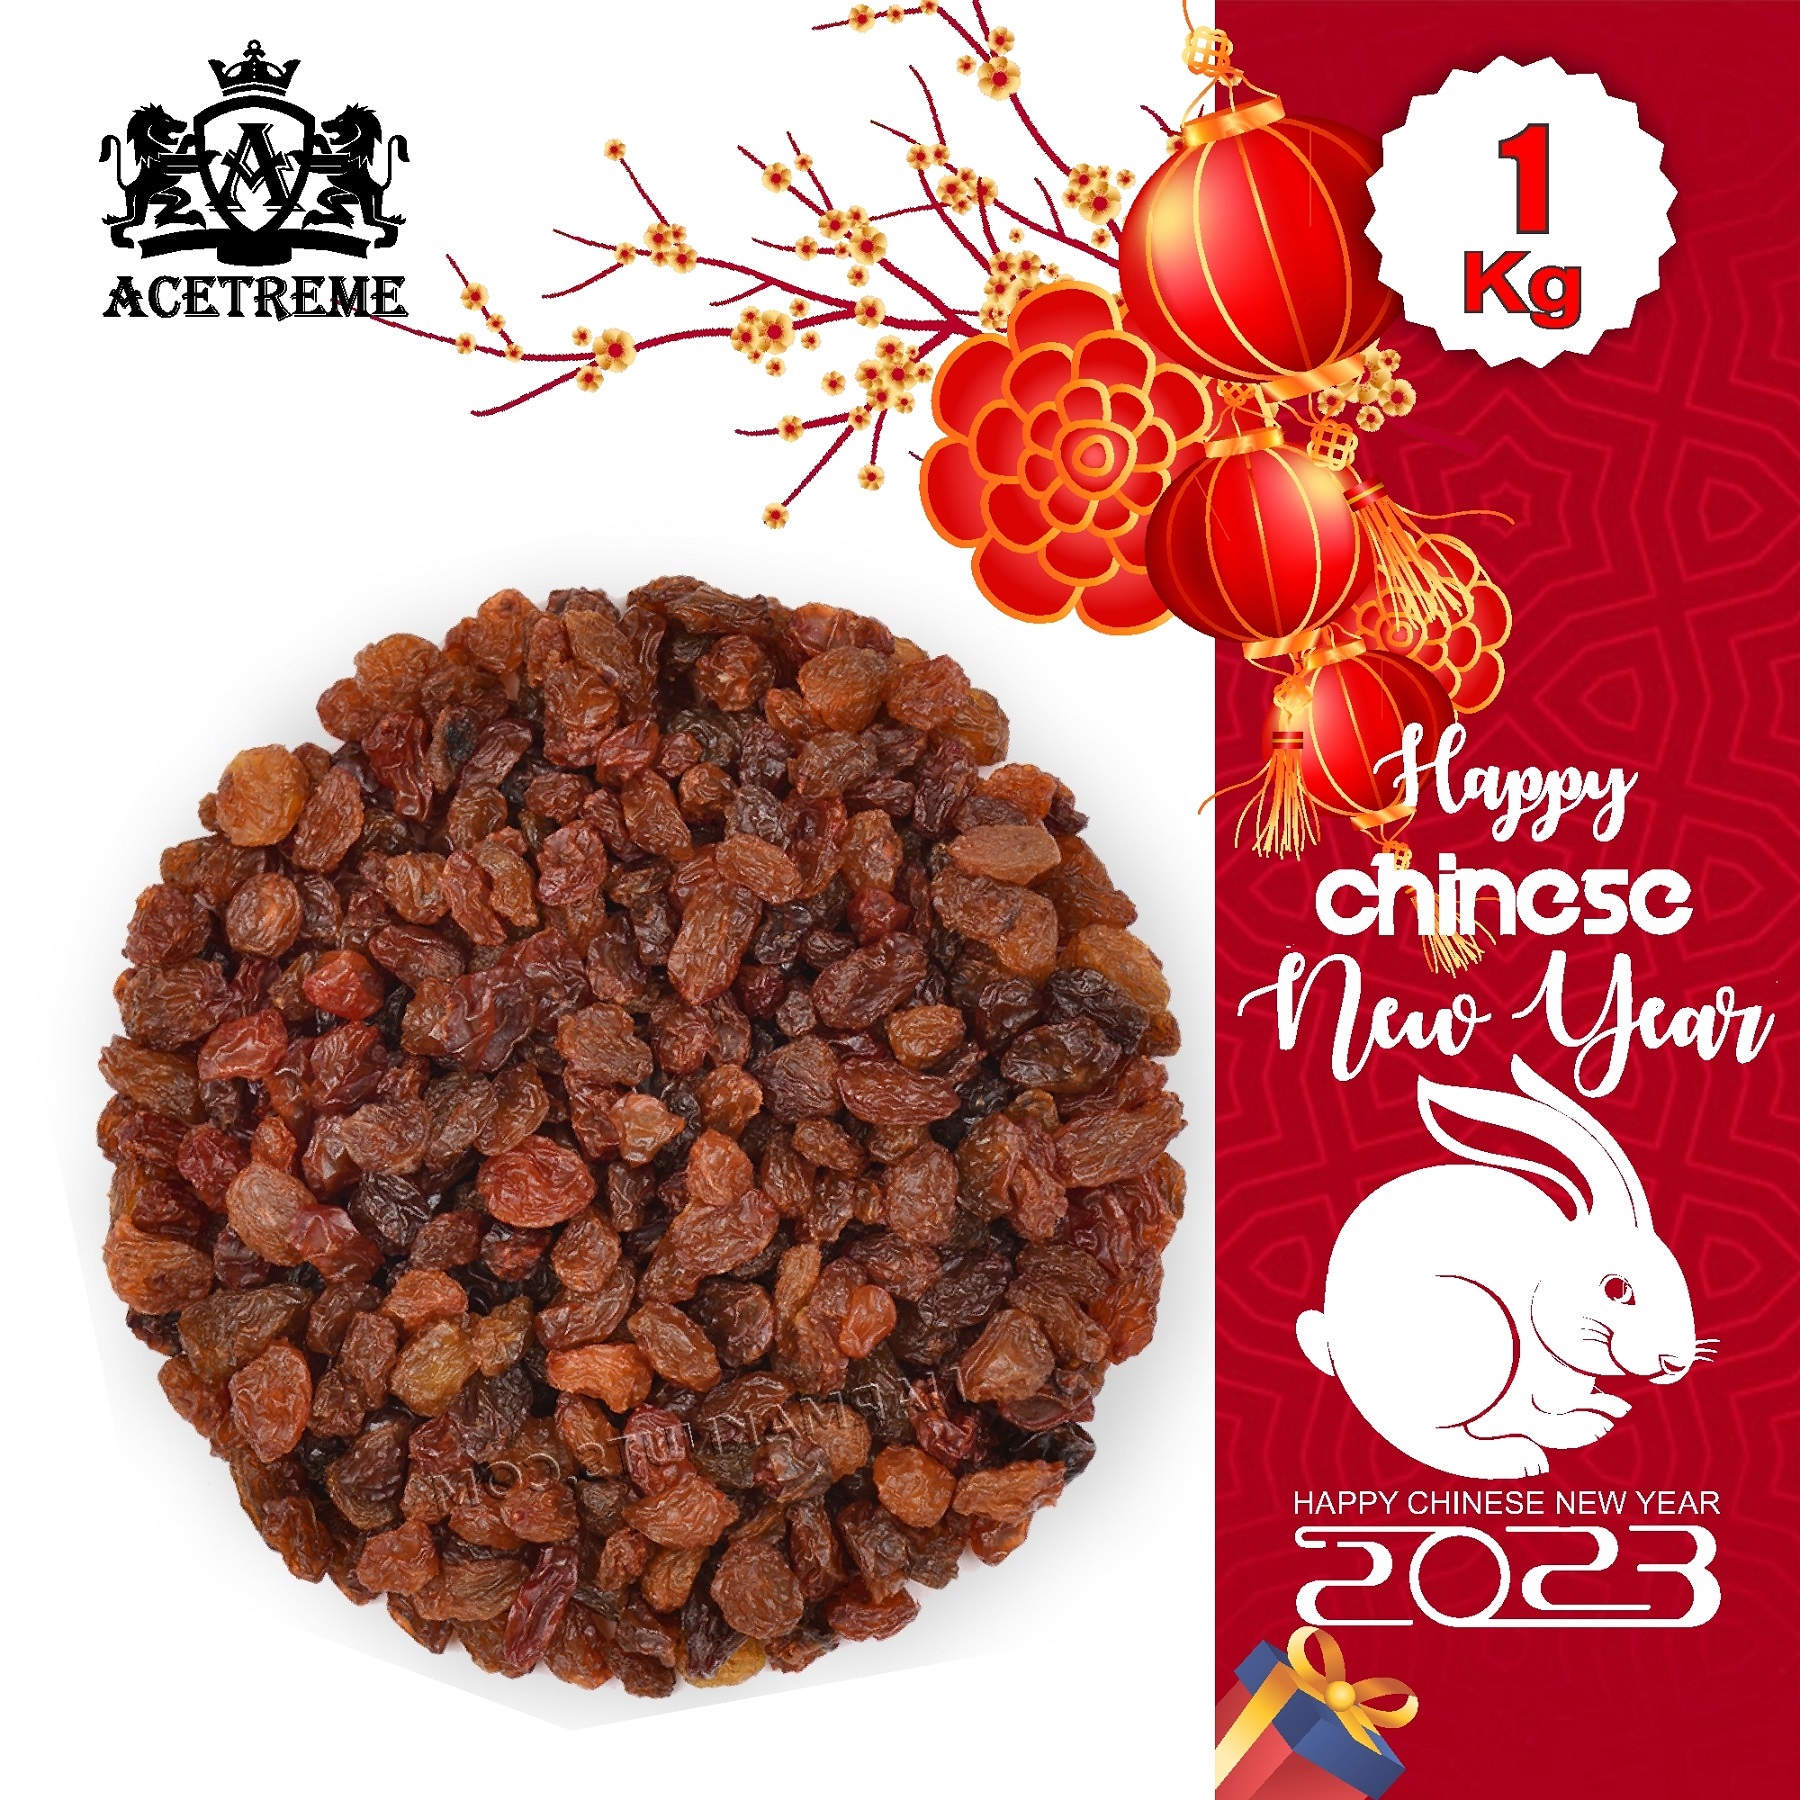 Chines new Year 2023-039-039